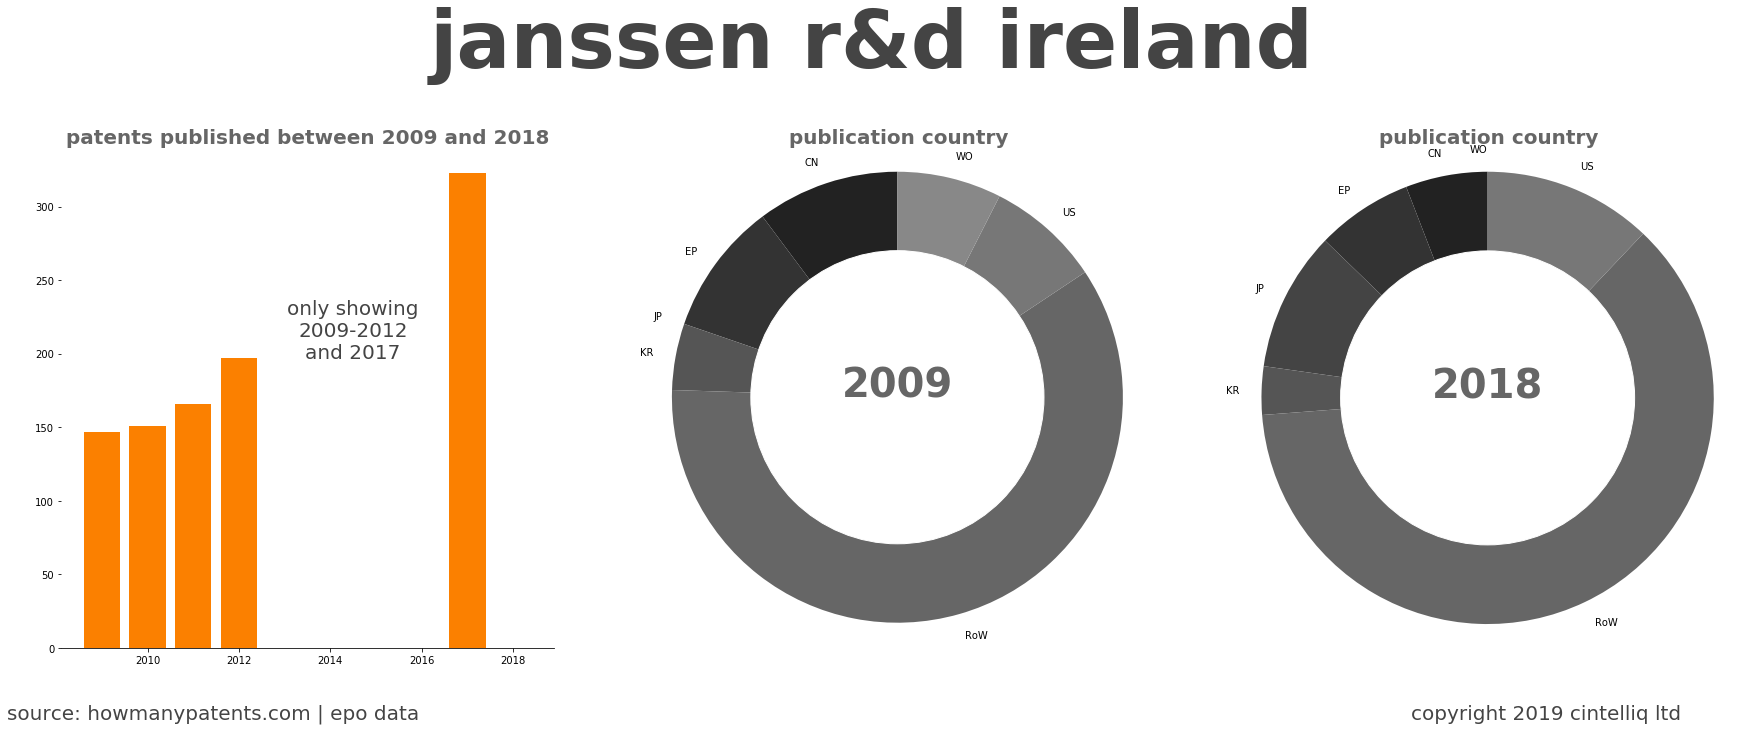 summary of patents for Janssen R&D Ireland